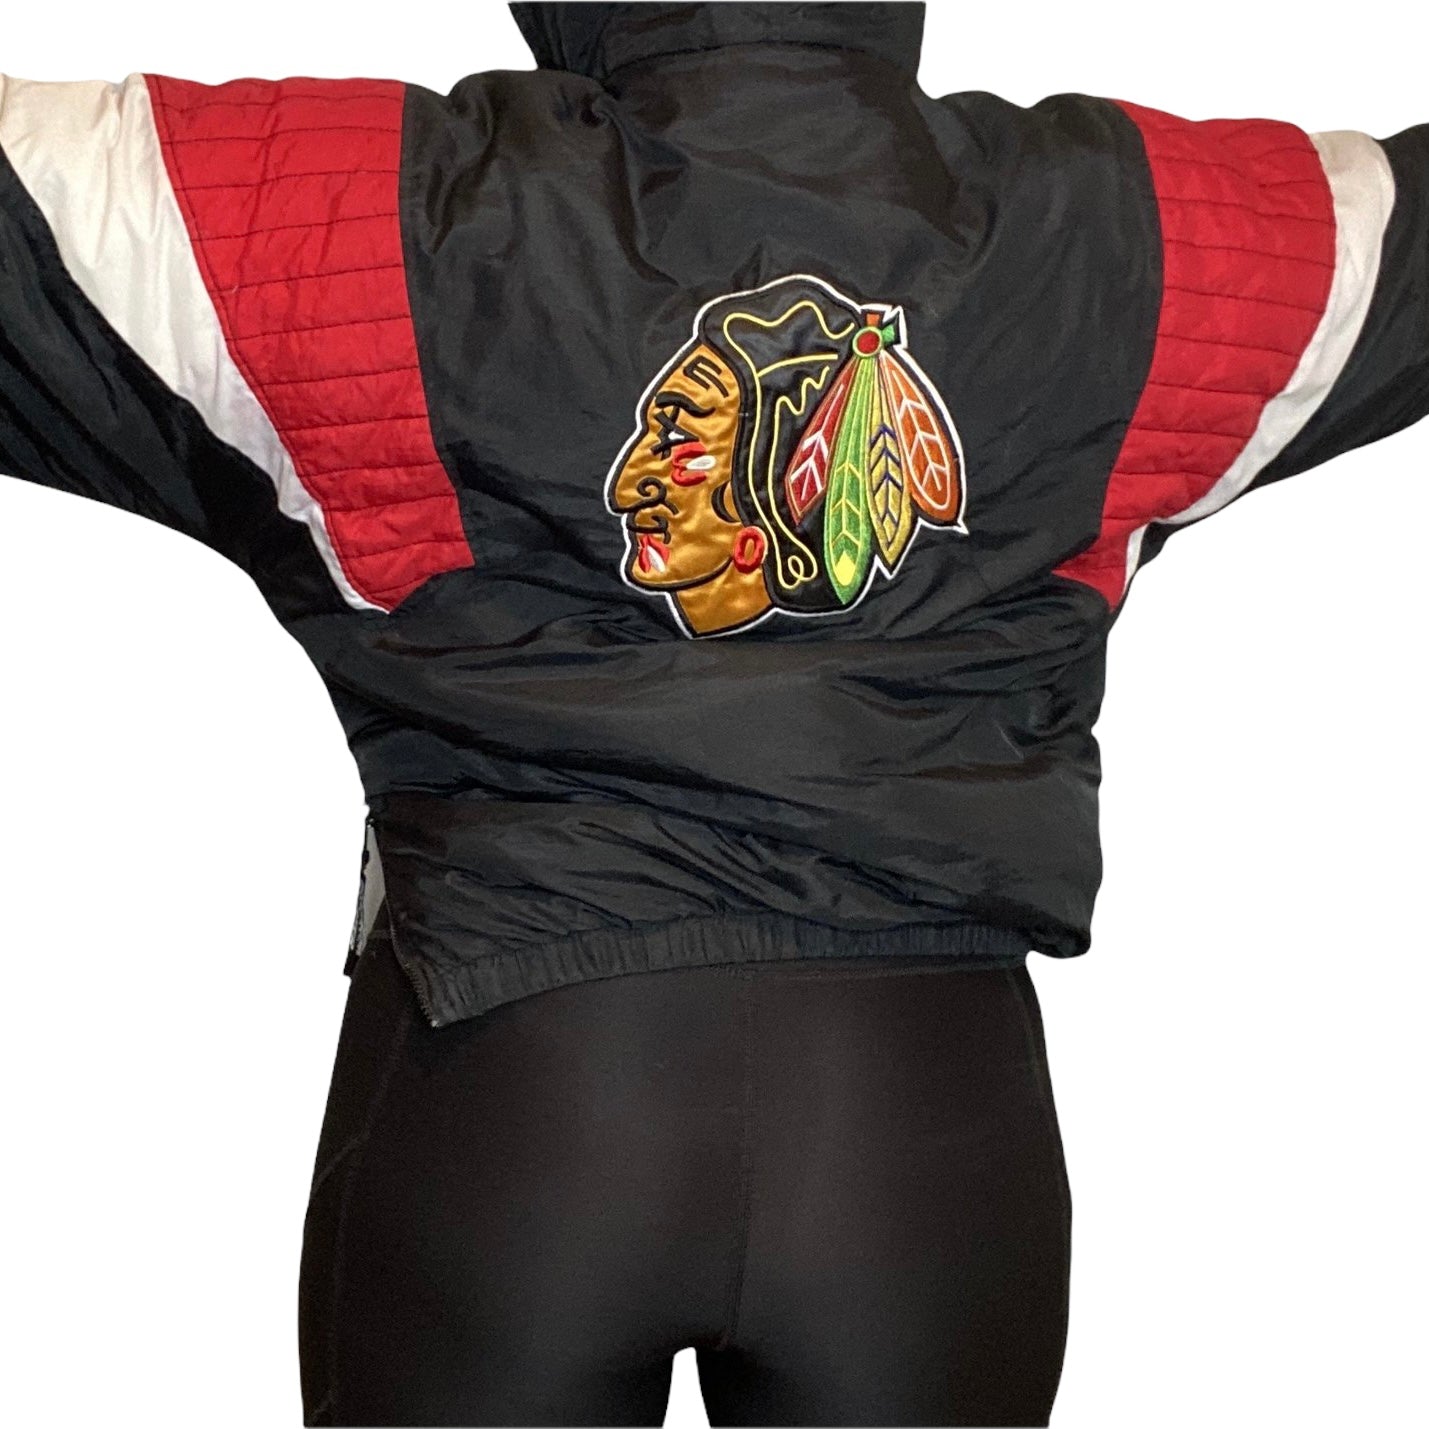 Vintage 1980s Starter Chicago Blackhawks NHL Jersey Sweatshirt 